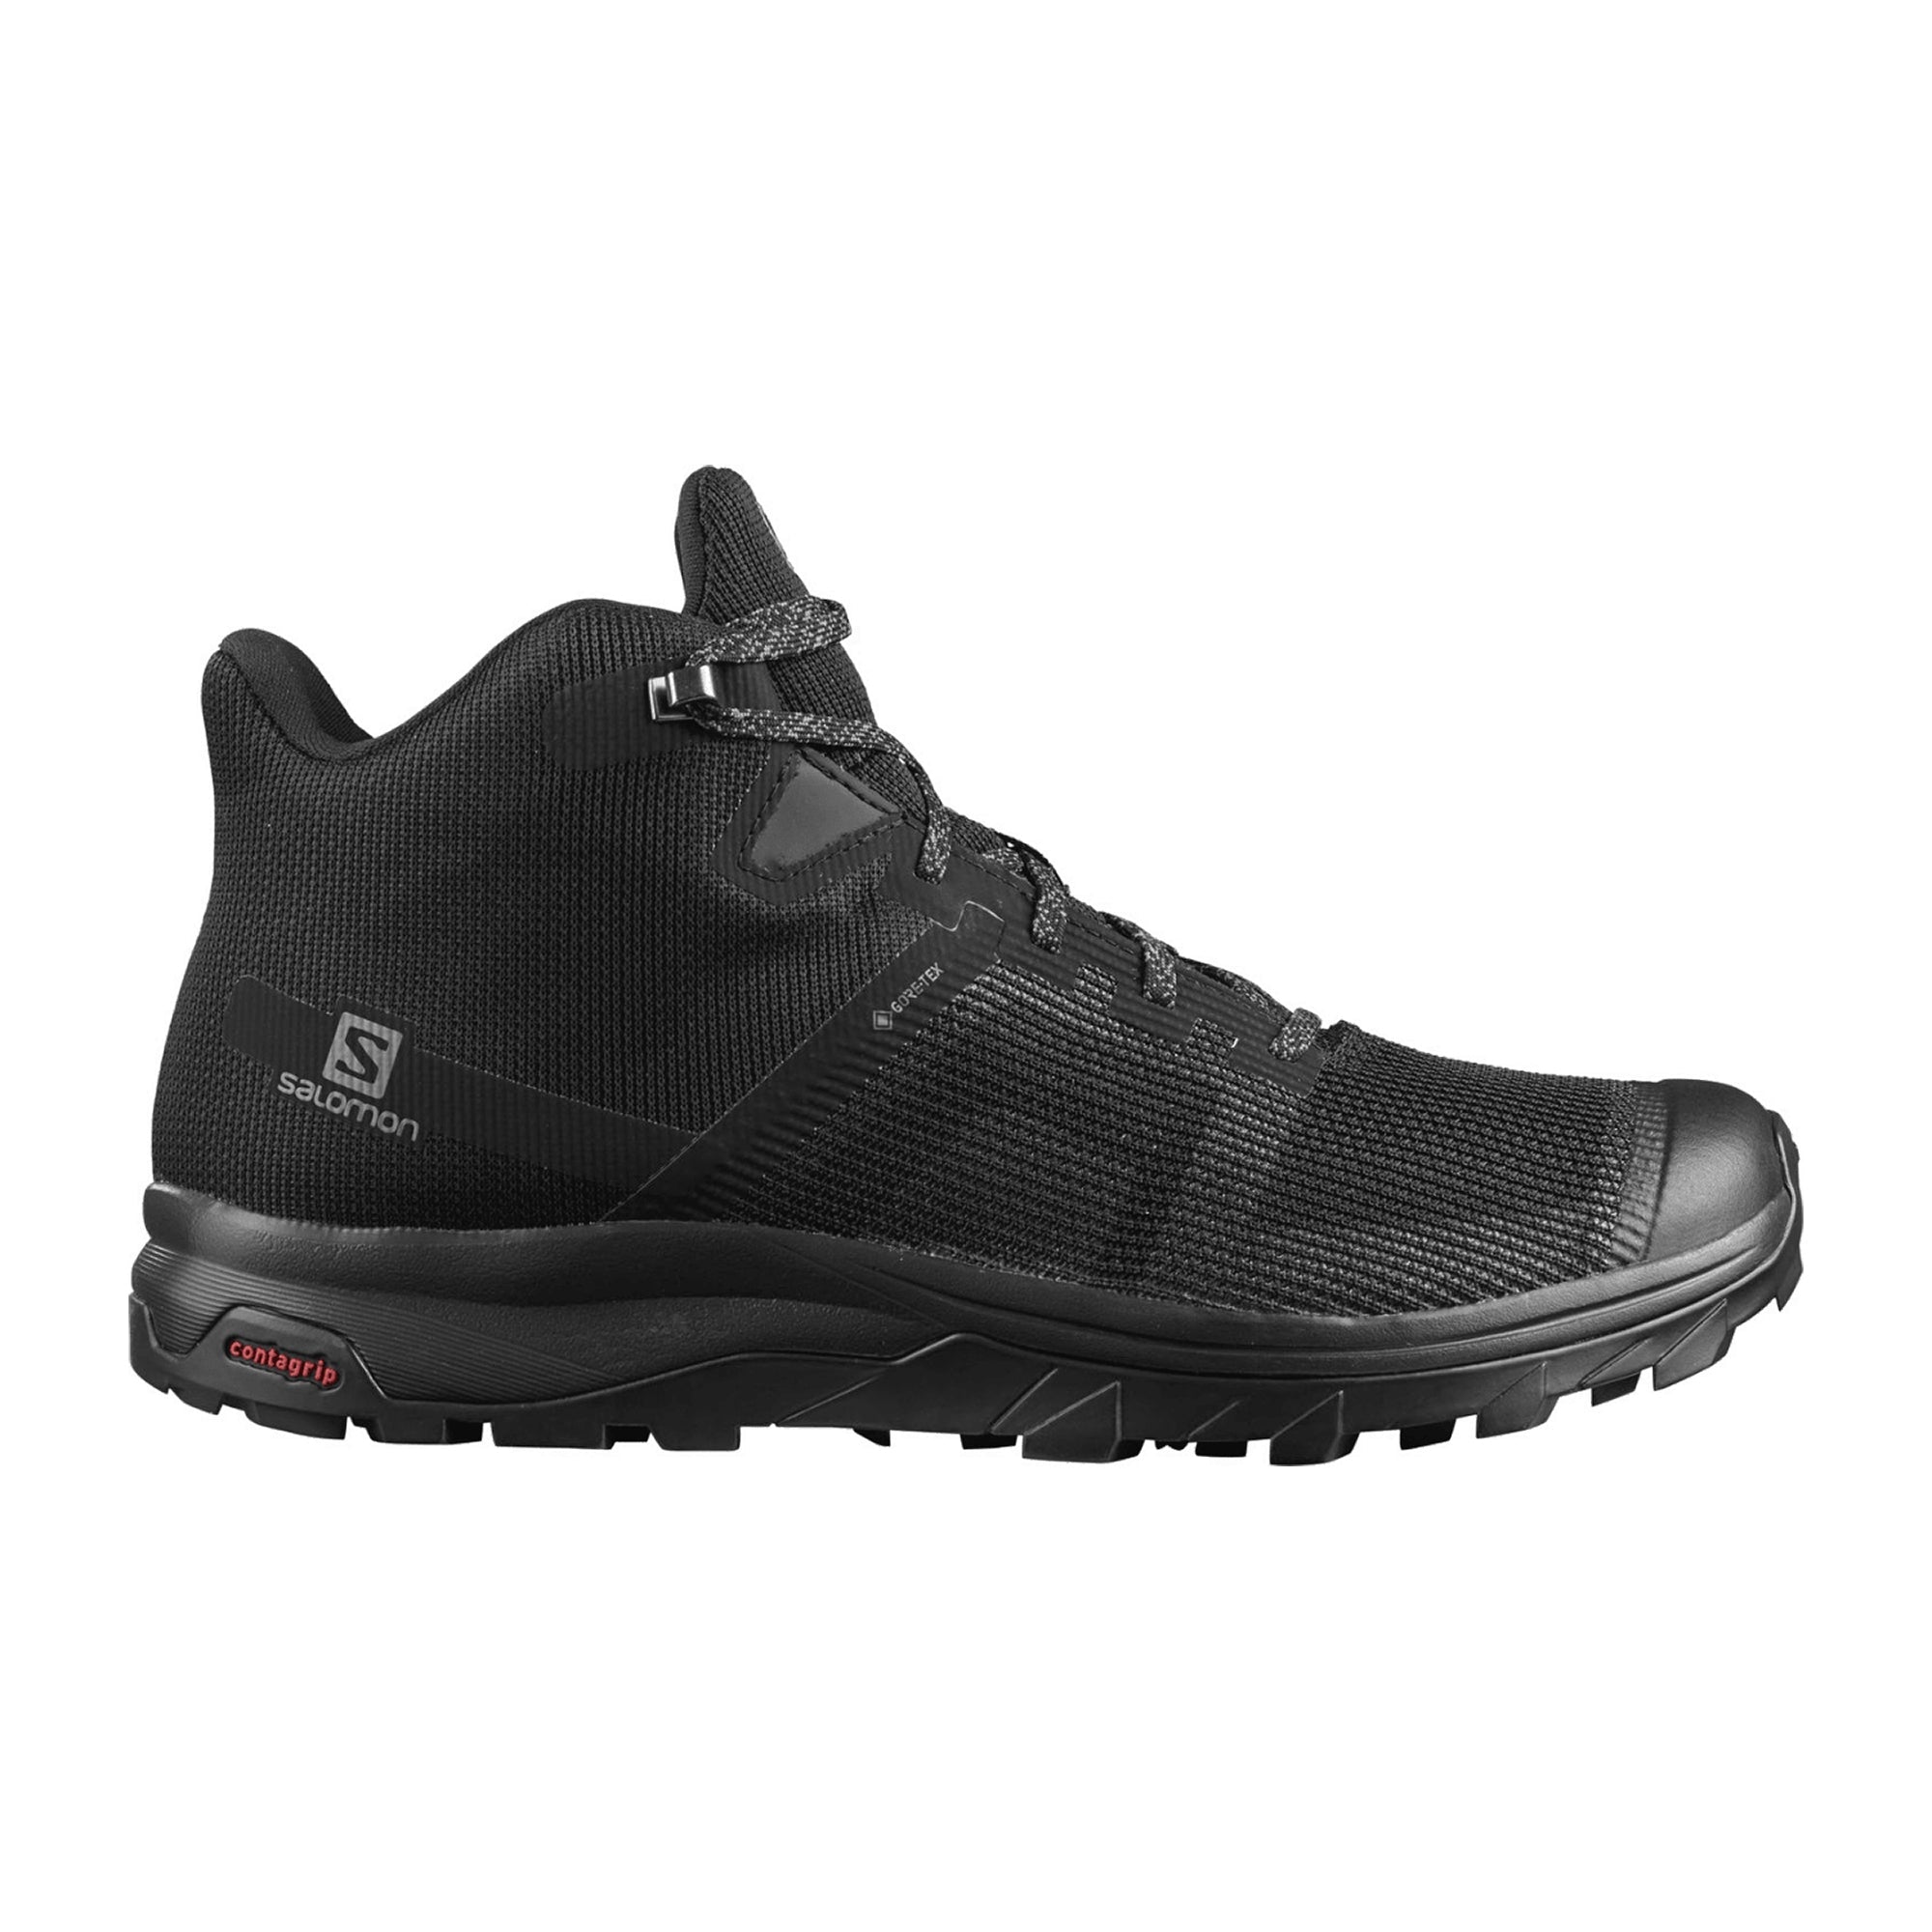 Salomon shoes OUTline Prism mid GTX Bk/Bk/ for men, black